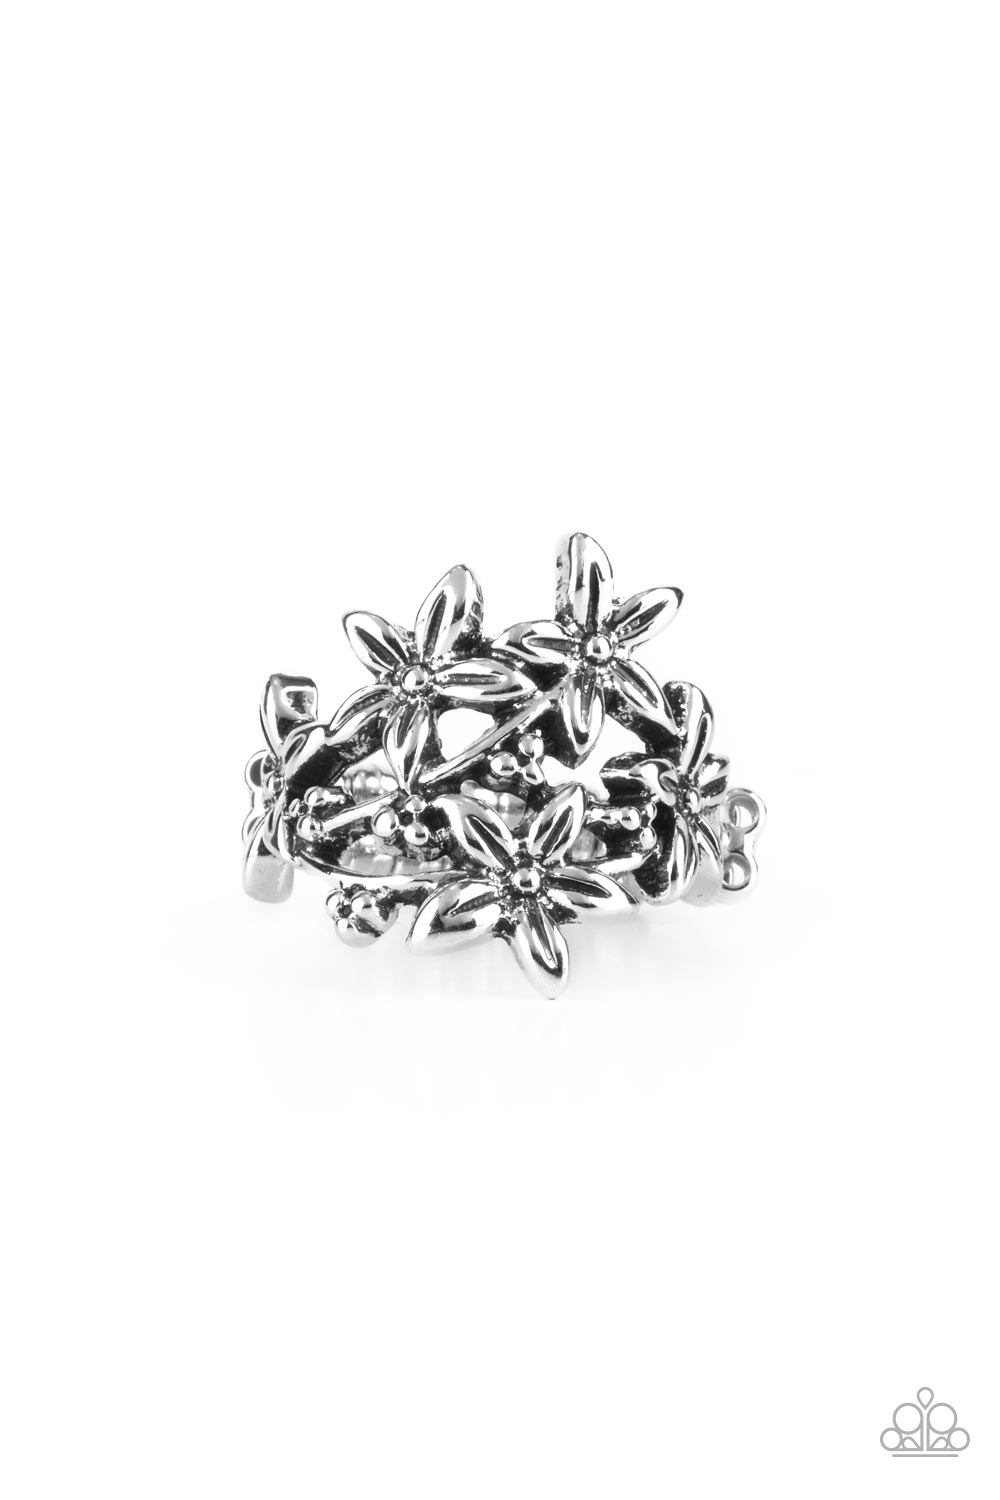 Prairie Primrose Silver Ring - Paparazzi Accessories- lightbox - CarasShop.com - $5 Jewelry by Cara Jewels